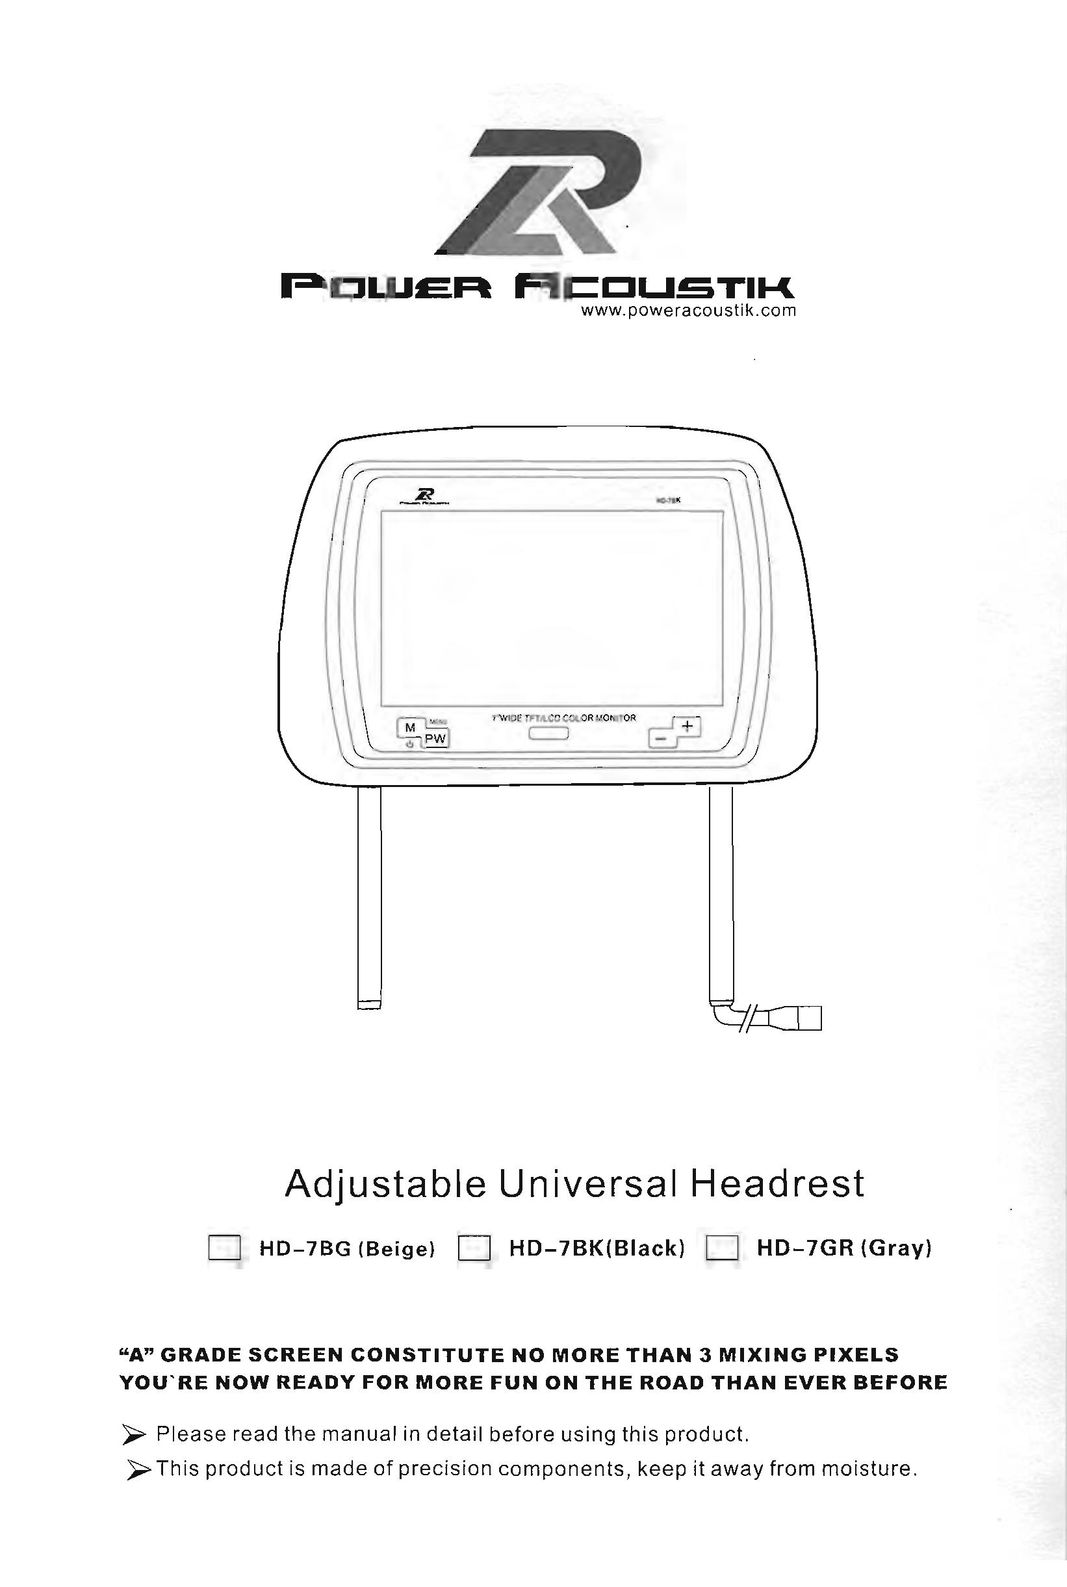 Power Acoustik HD-7BG Car Video System User Manual